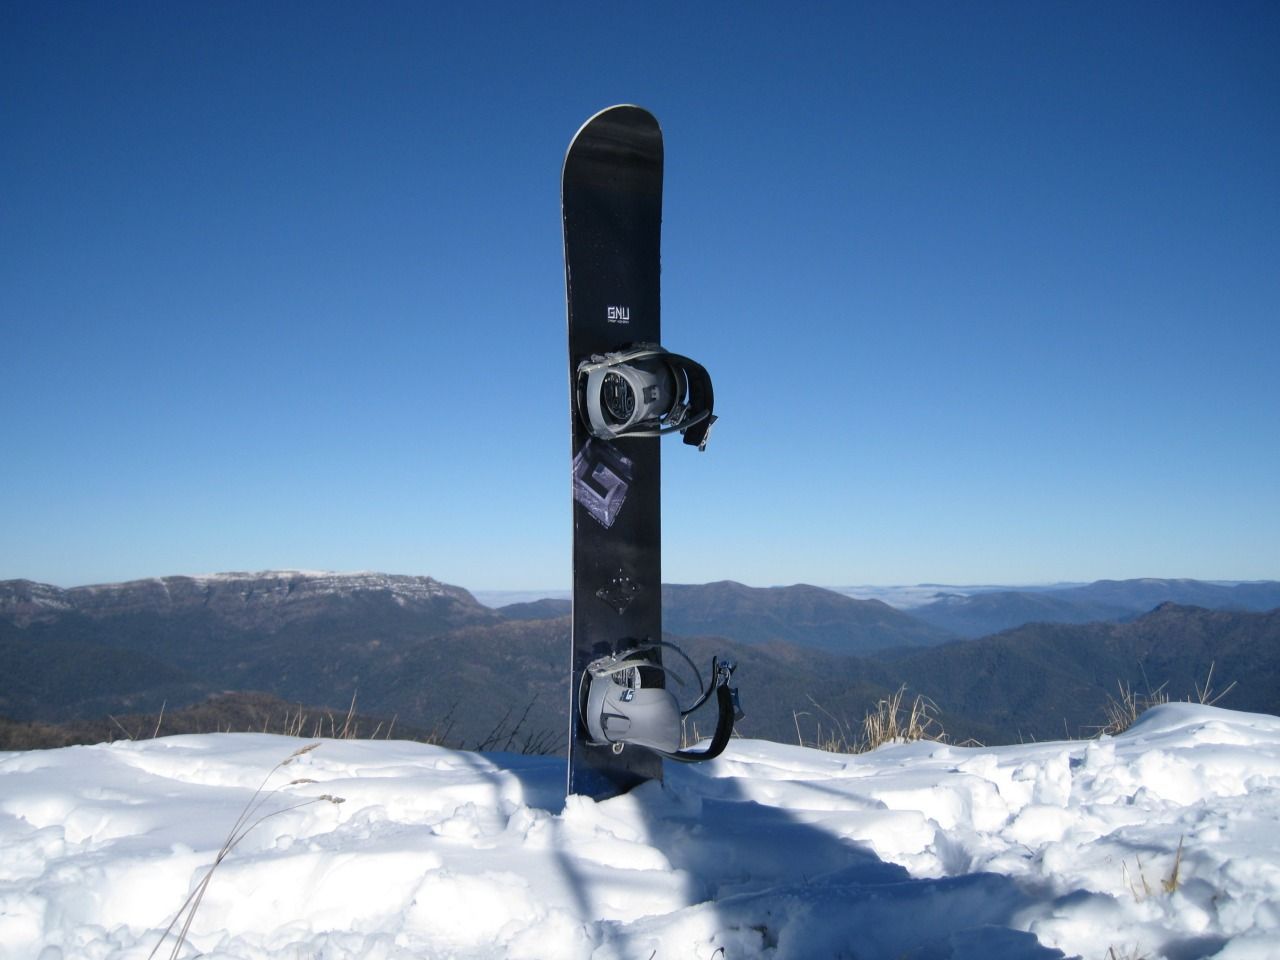 Hd Snowboarding Wallpaper Iphone | My Heart up Close